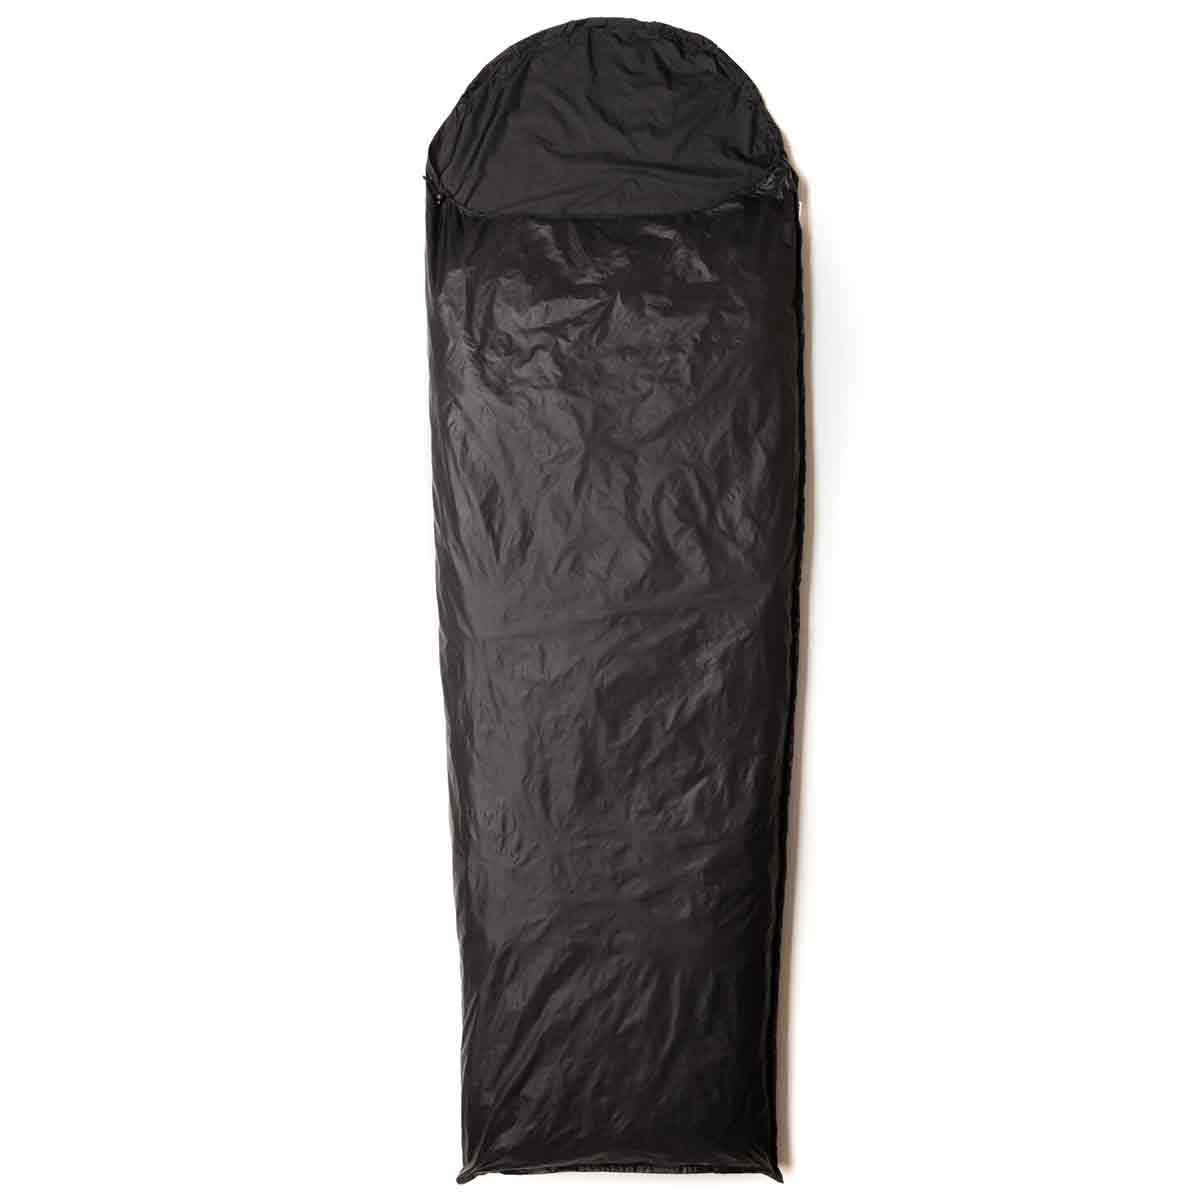 Snugpak Paratex Sleeping Bag Liner - John Bull Clothing